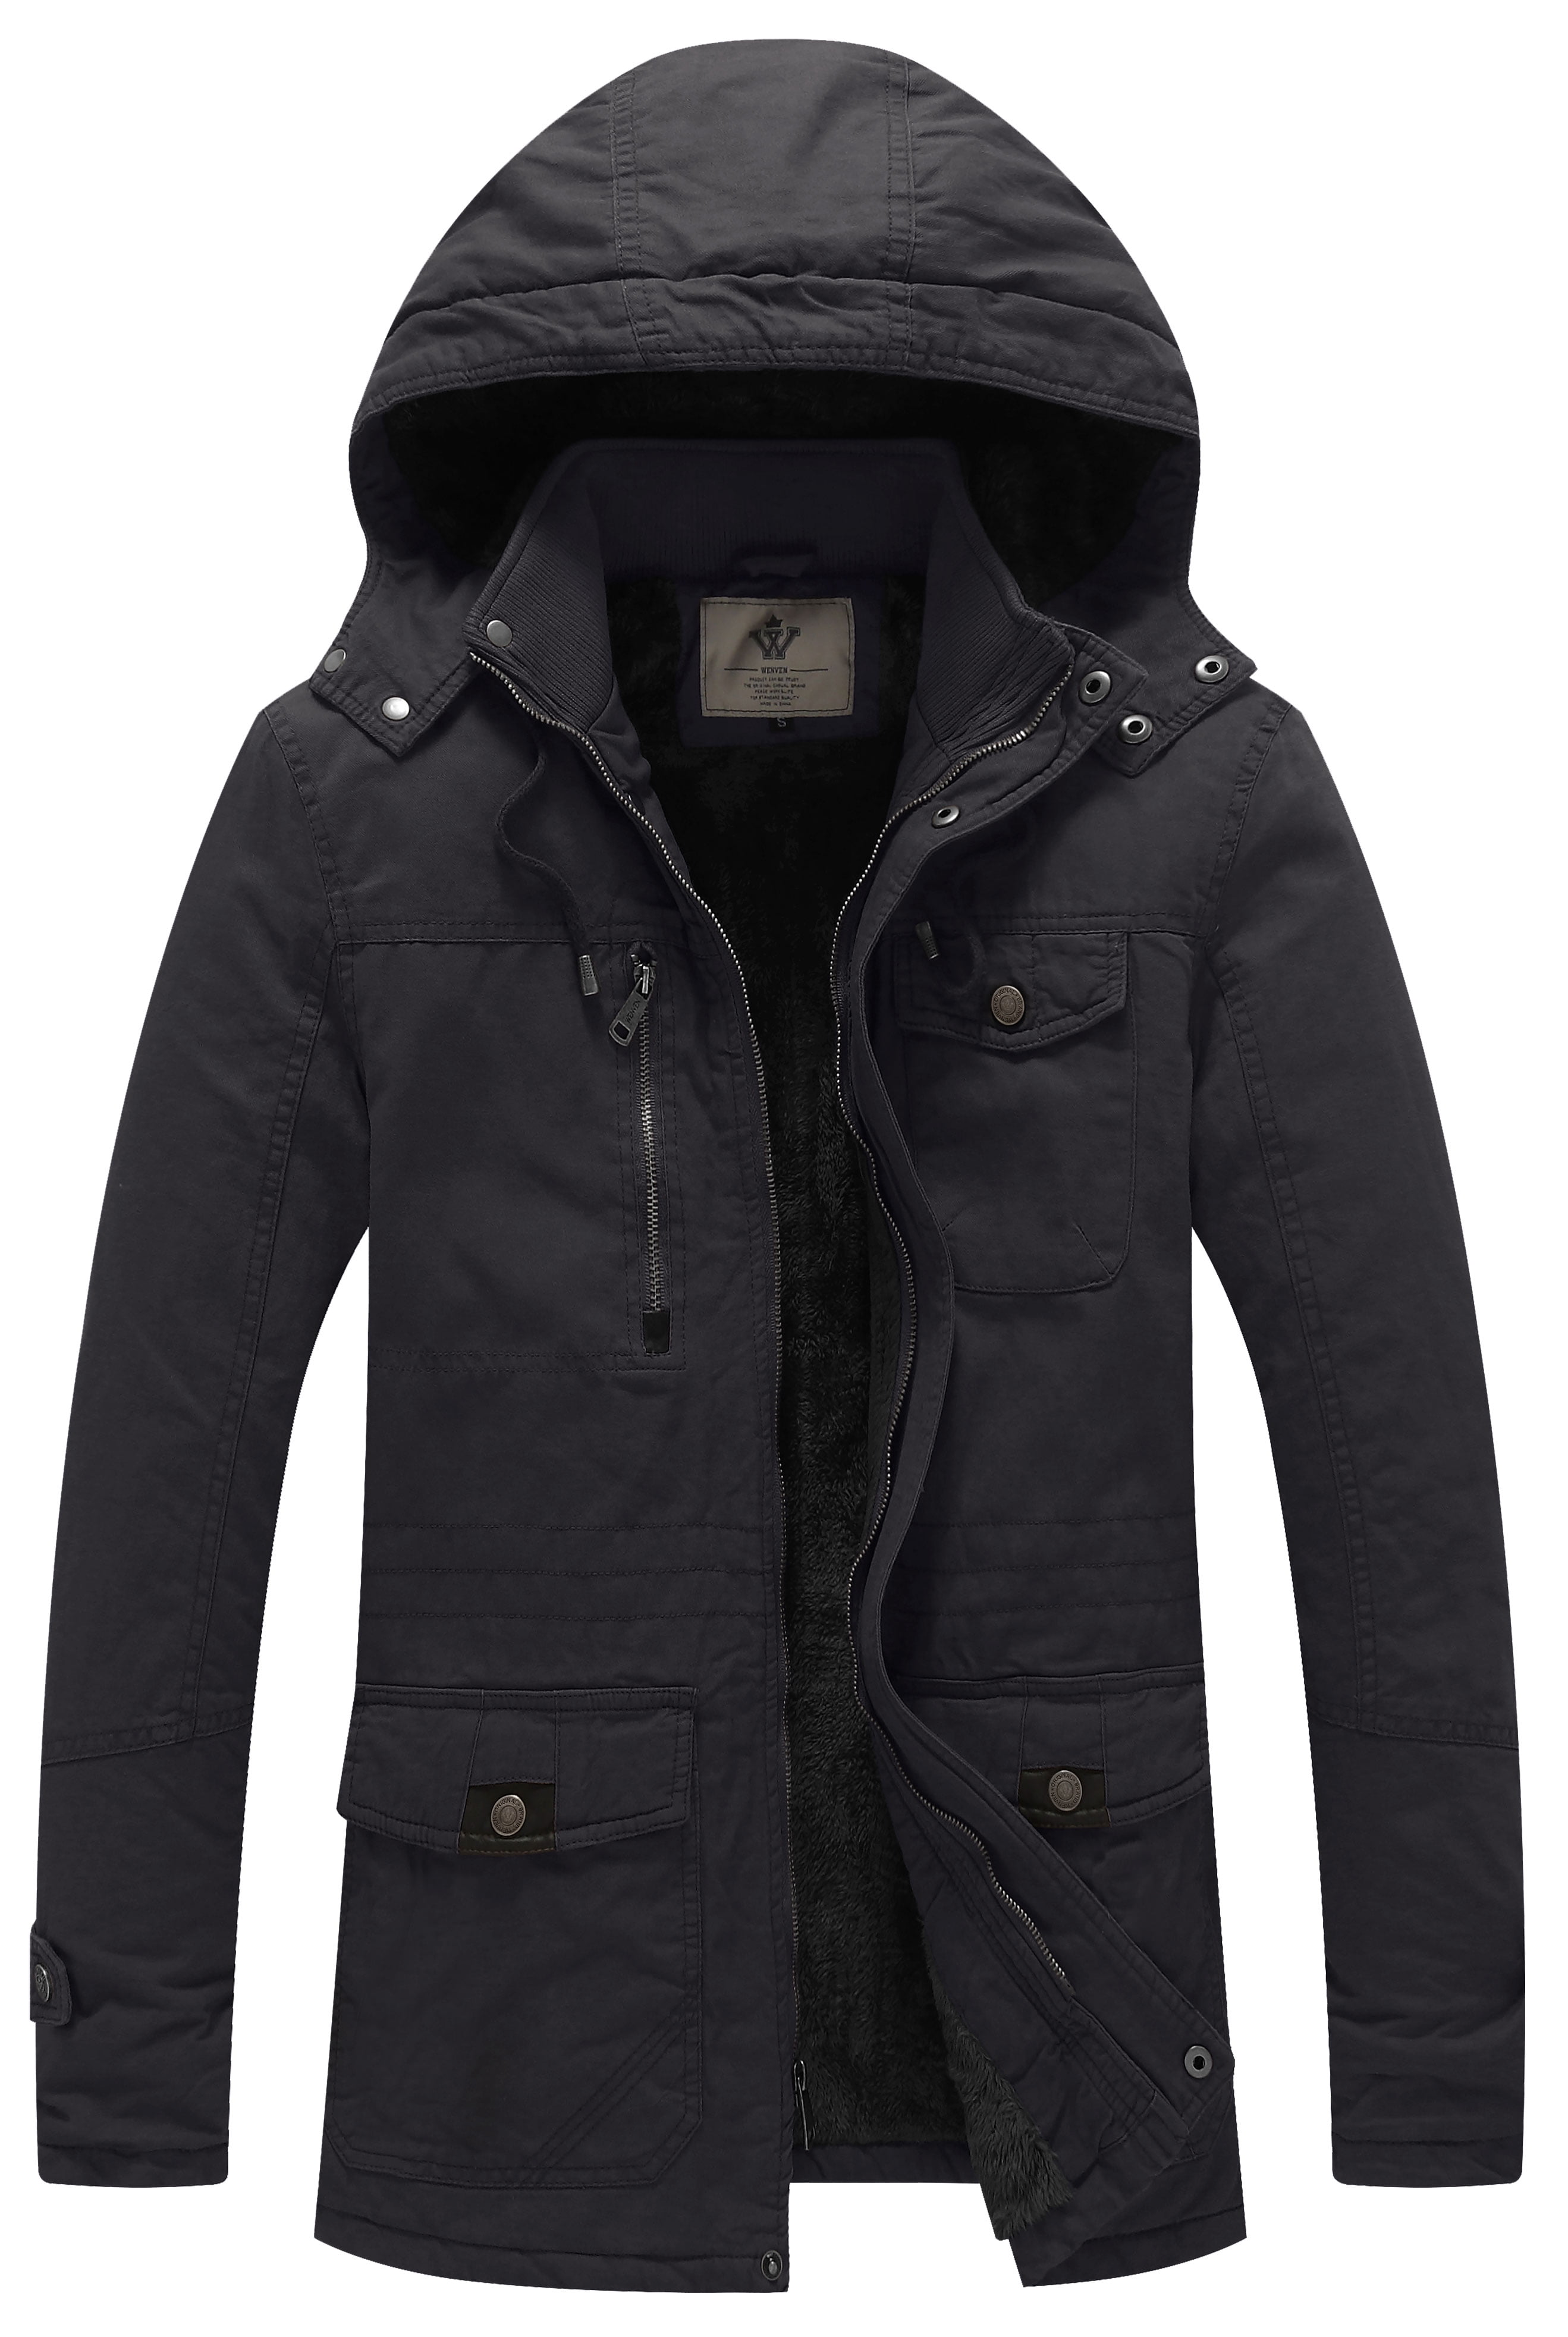 WenVen Men's Warm Thickened Cotton Jacket Coat XL - Walmart.com